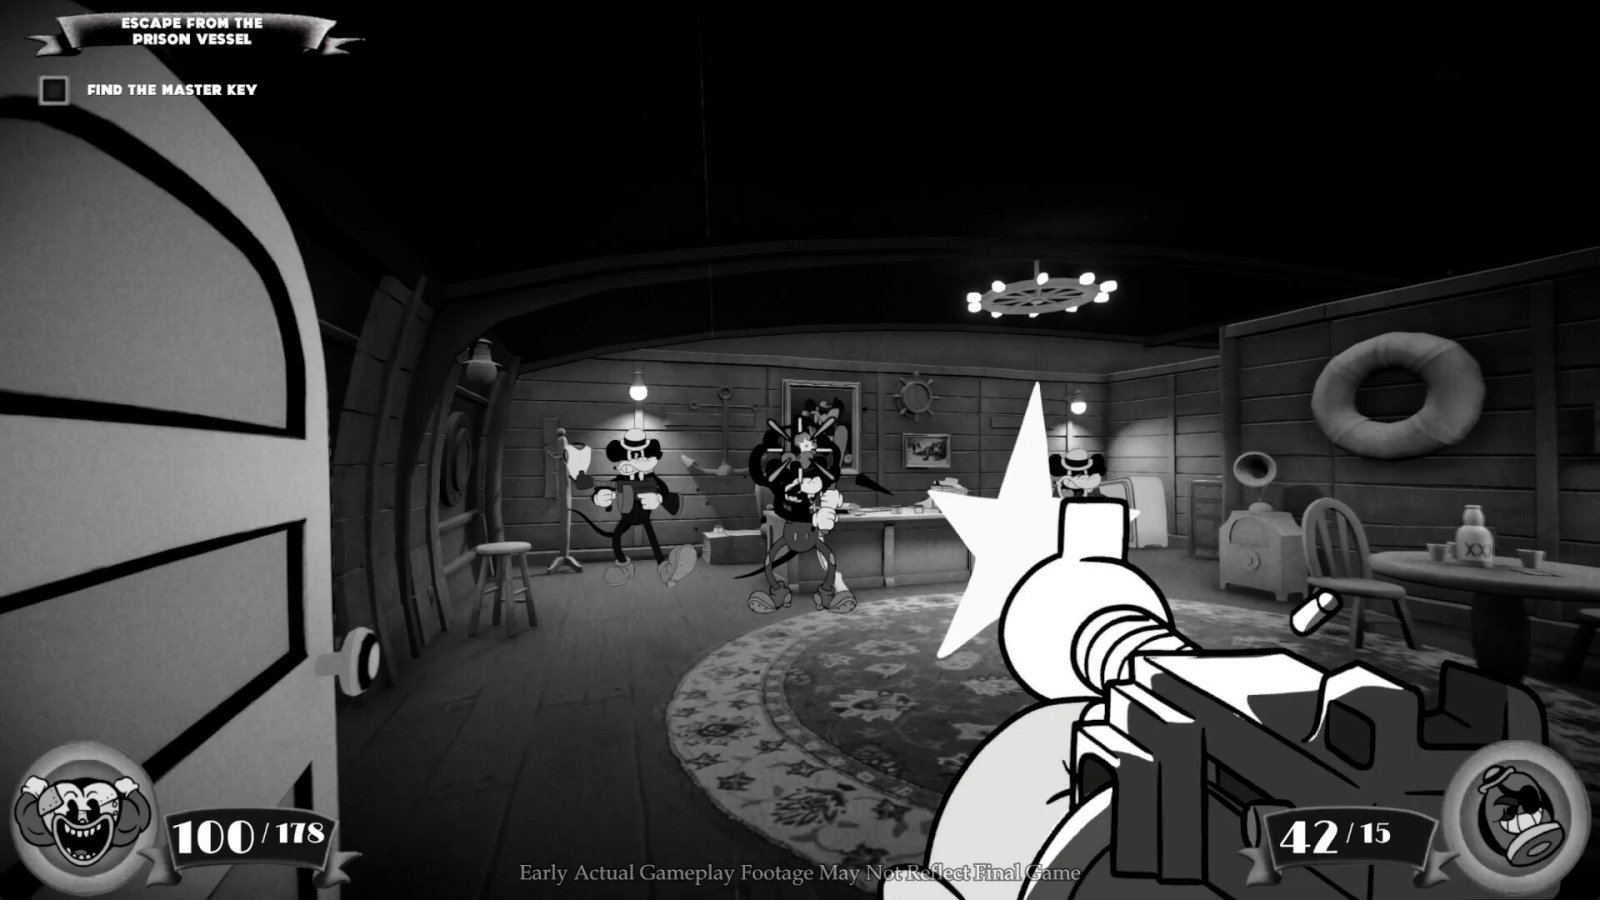 MOUSE, un nuovo trailer del gameplay per lo sparatutto cartoonesco